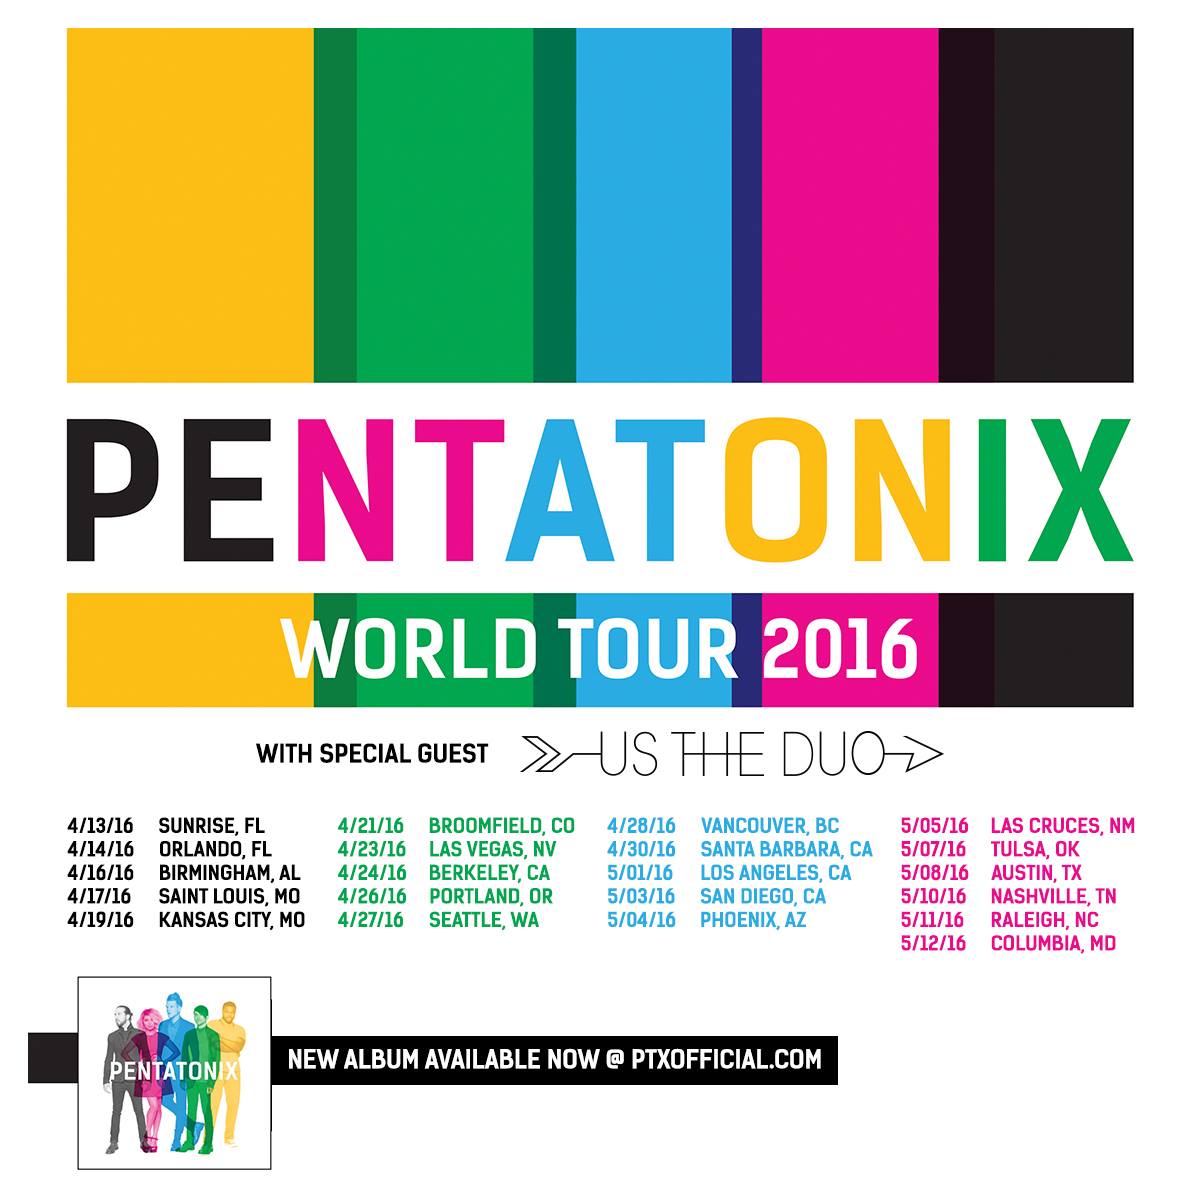 Pentatonix - Pentatonix World Tour - 2016 Tour Poster